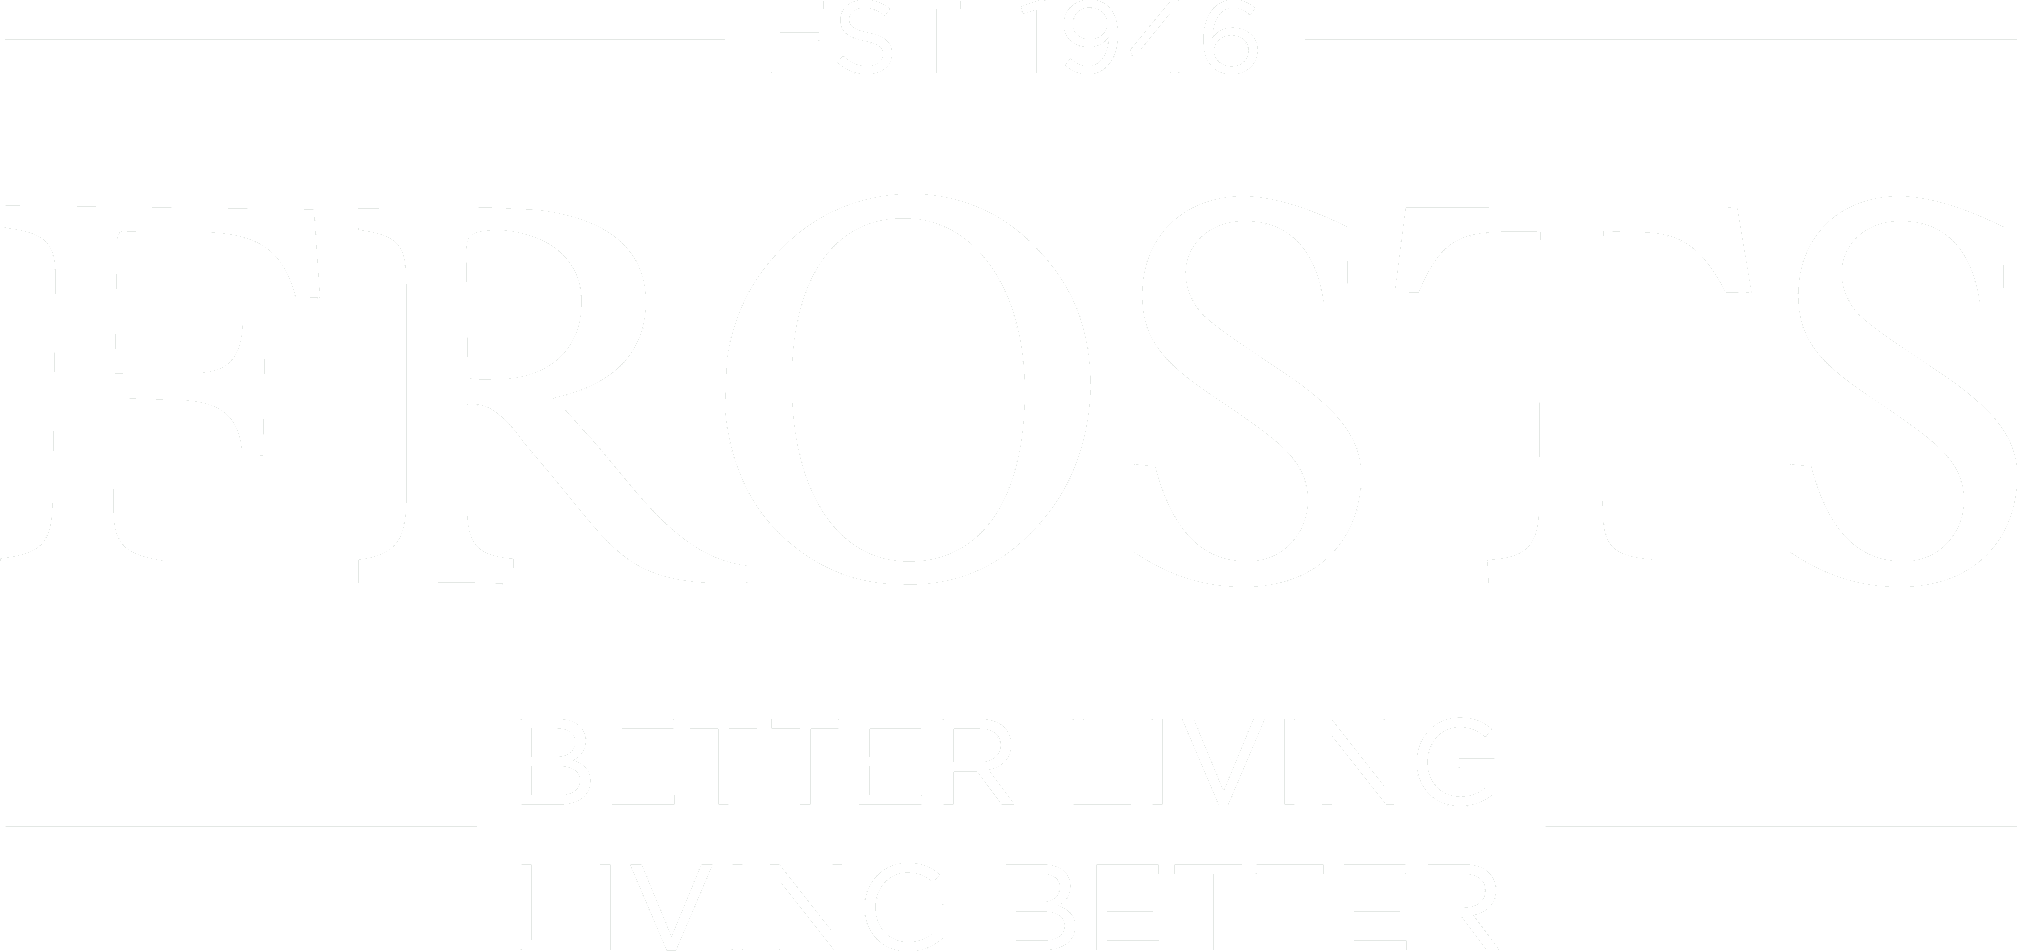 Frosts logo.